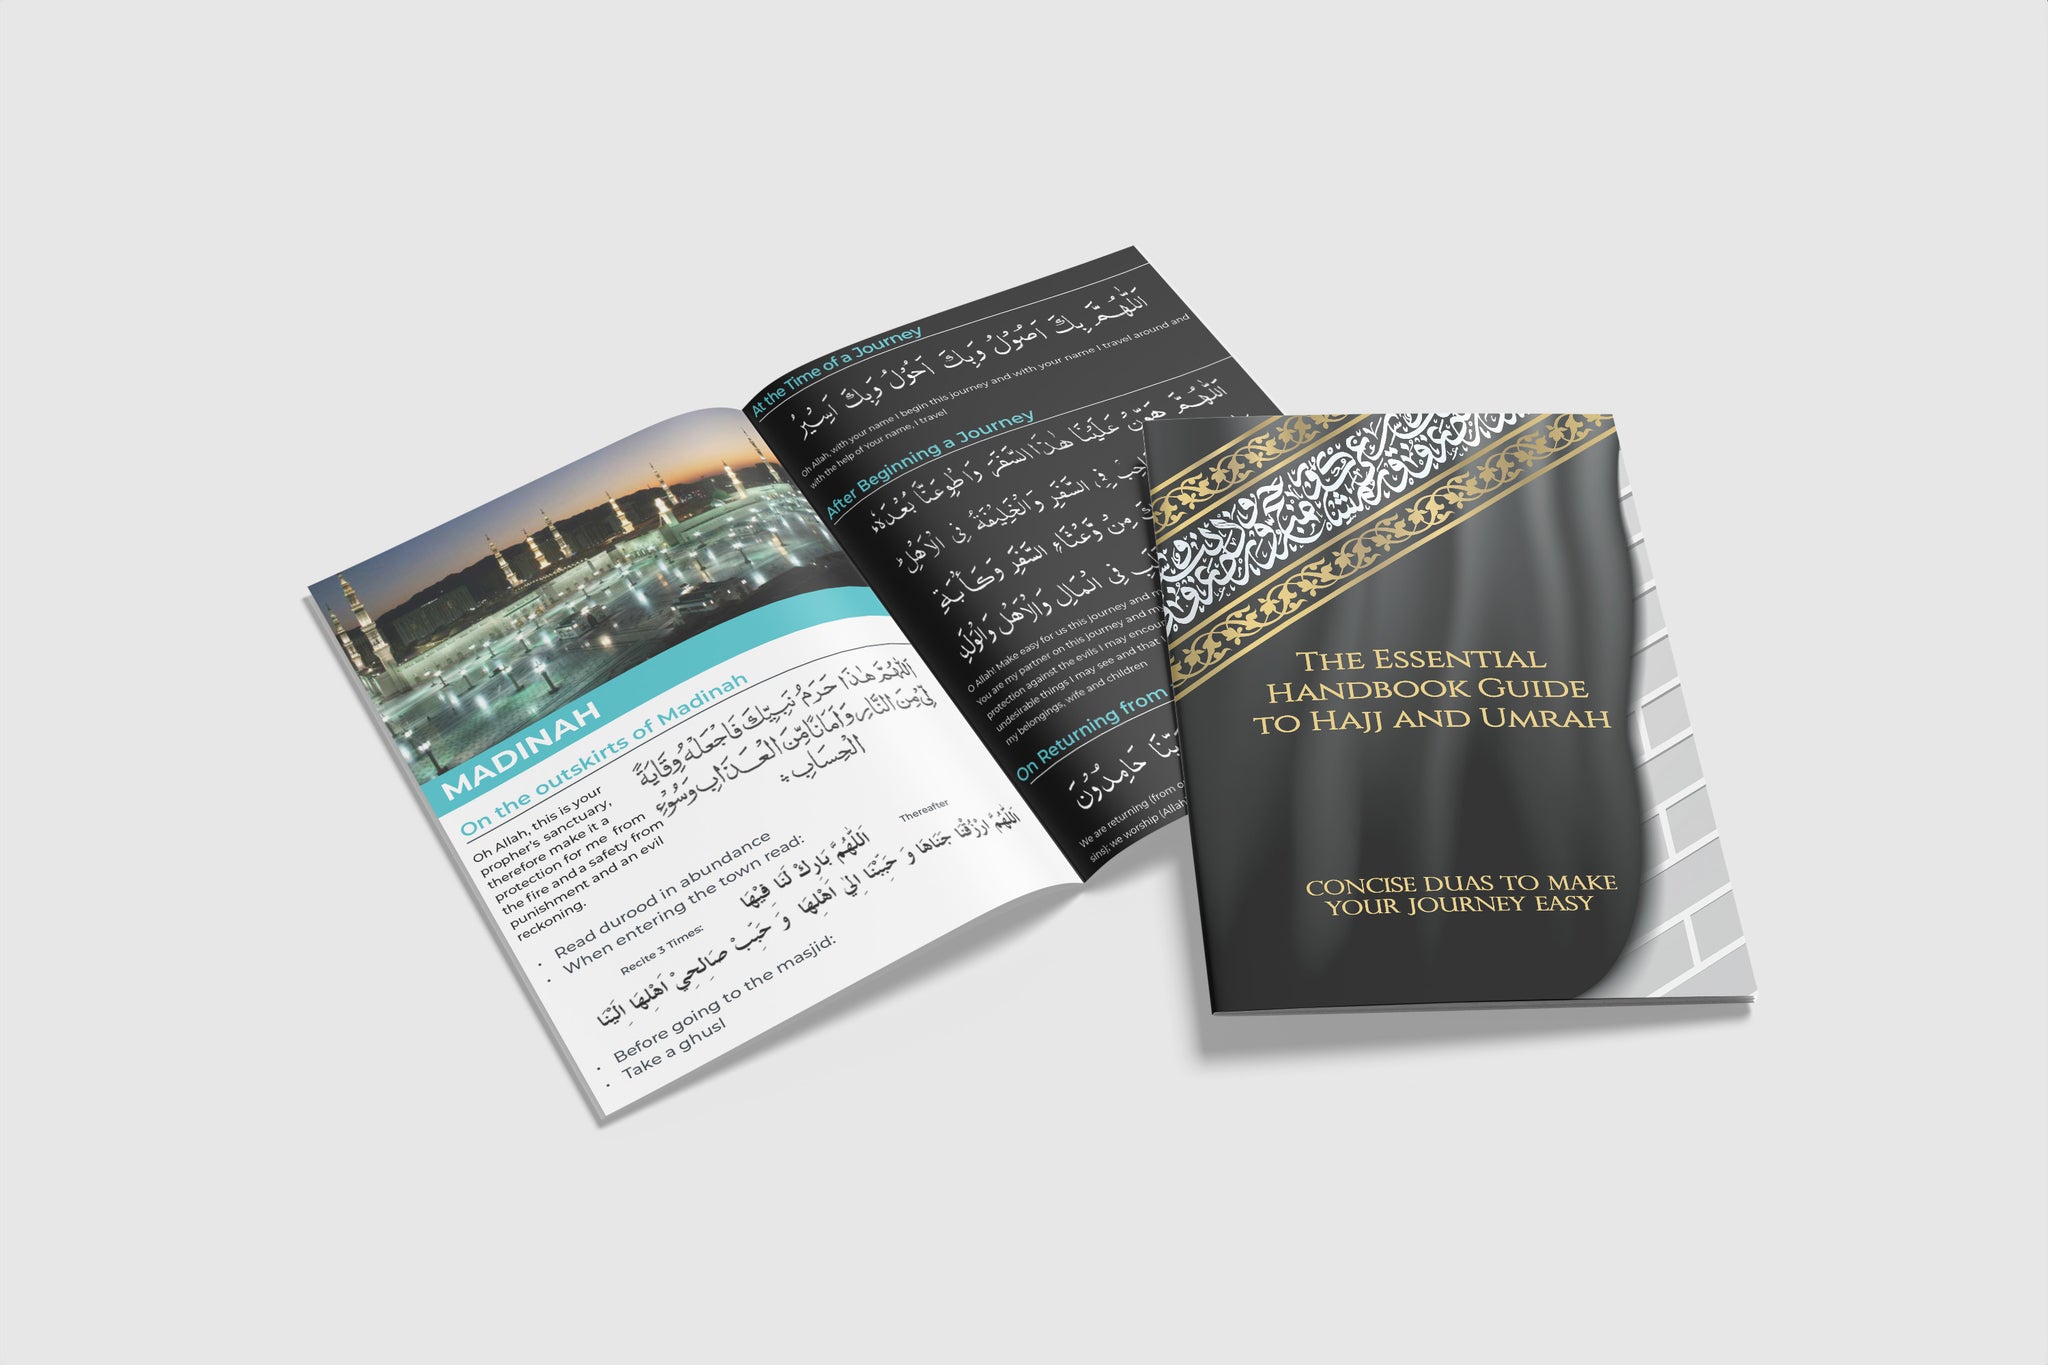 Handbook Guide to Hajj and Umrah